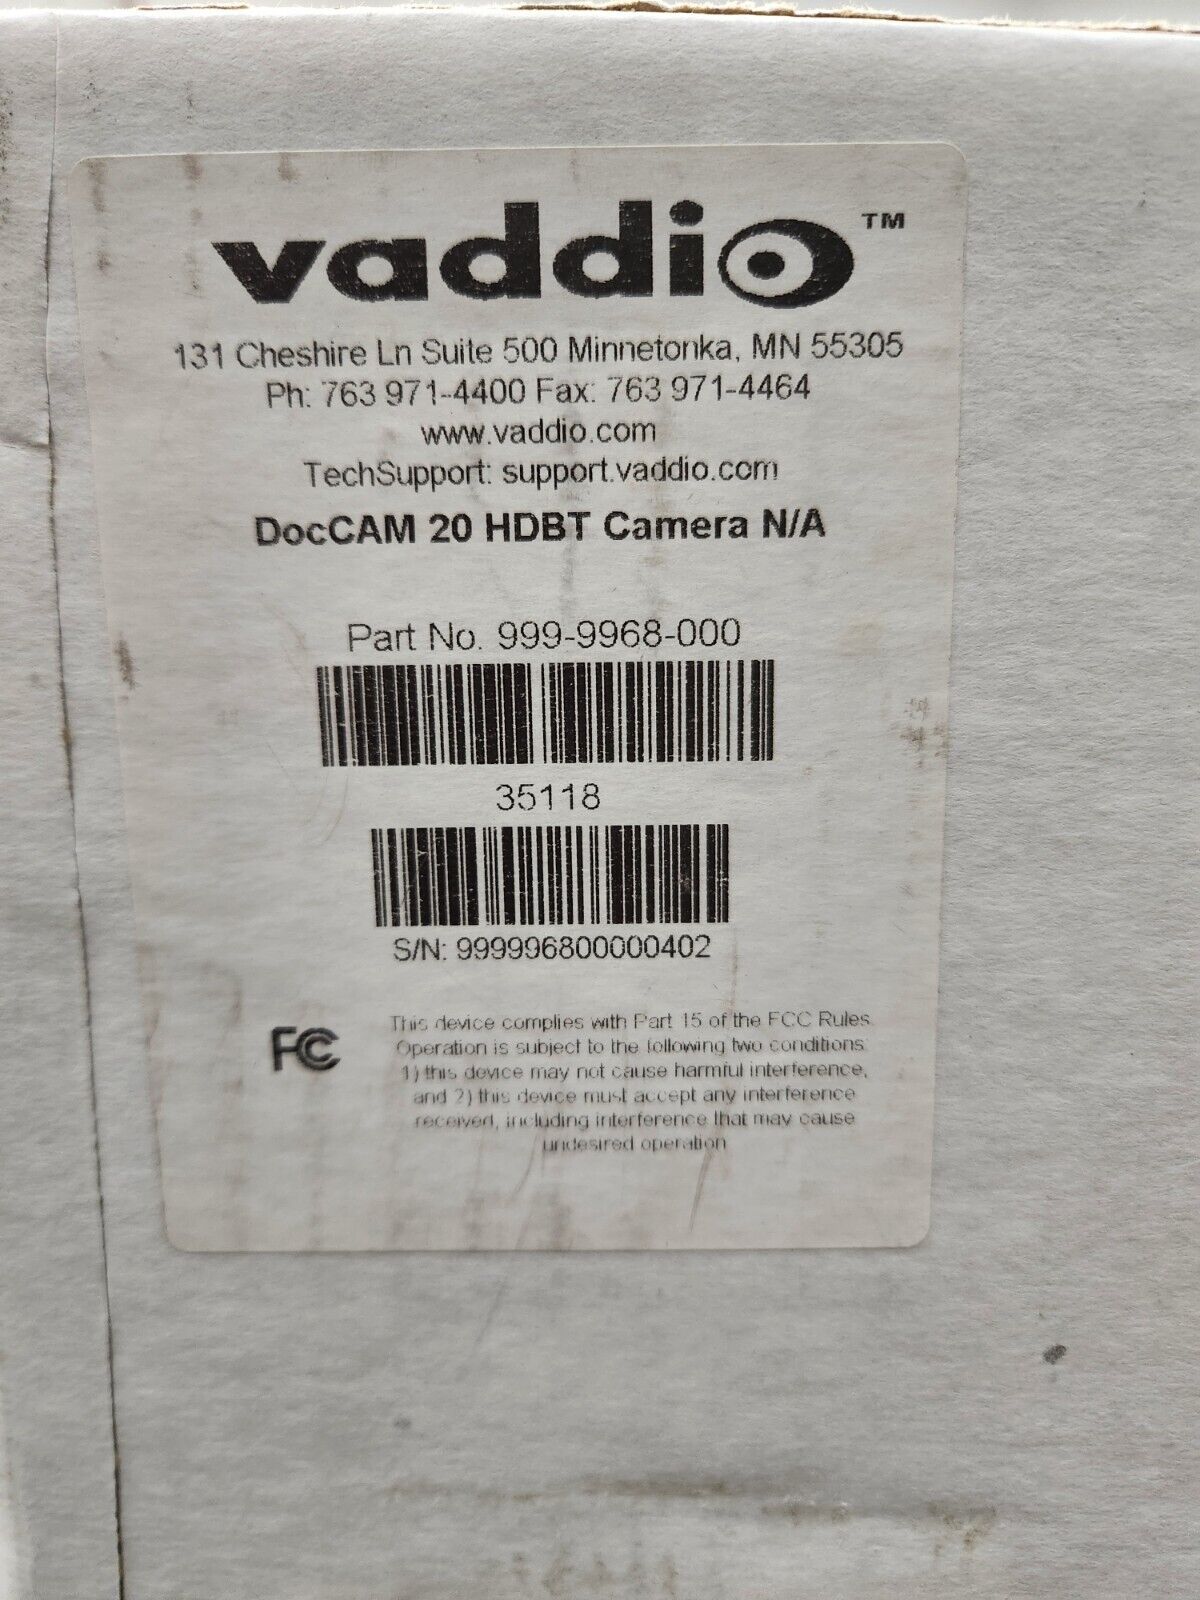 Vaddio DocCAM 20 HDBT Ceiling-Mounted Document Camera 999-9968-000